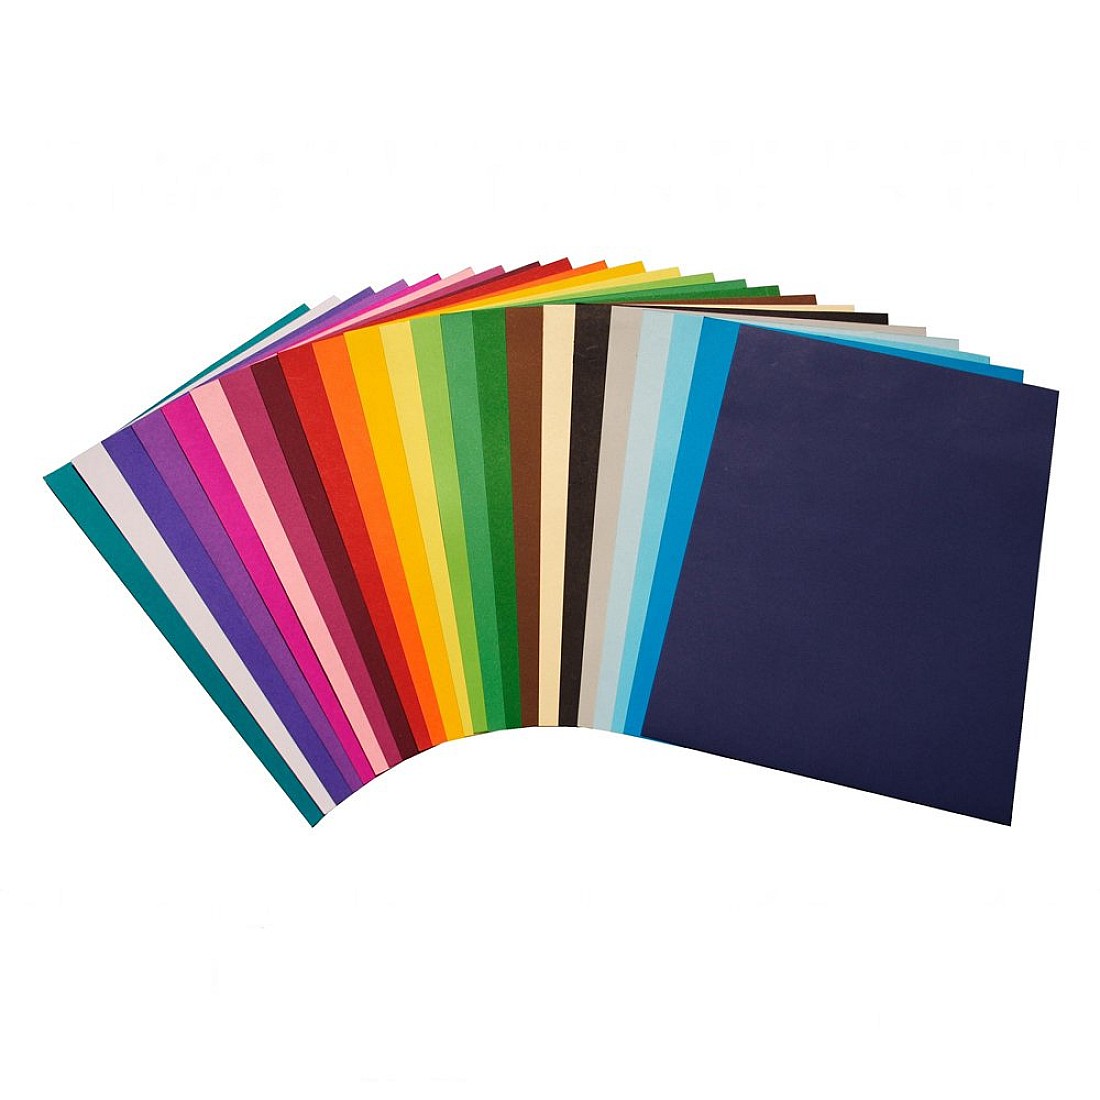 Rössler Papier Paperado A4 160gr. per 10 Sheets (22 colors)